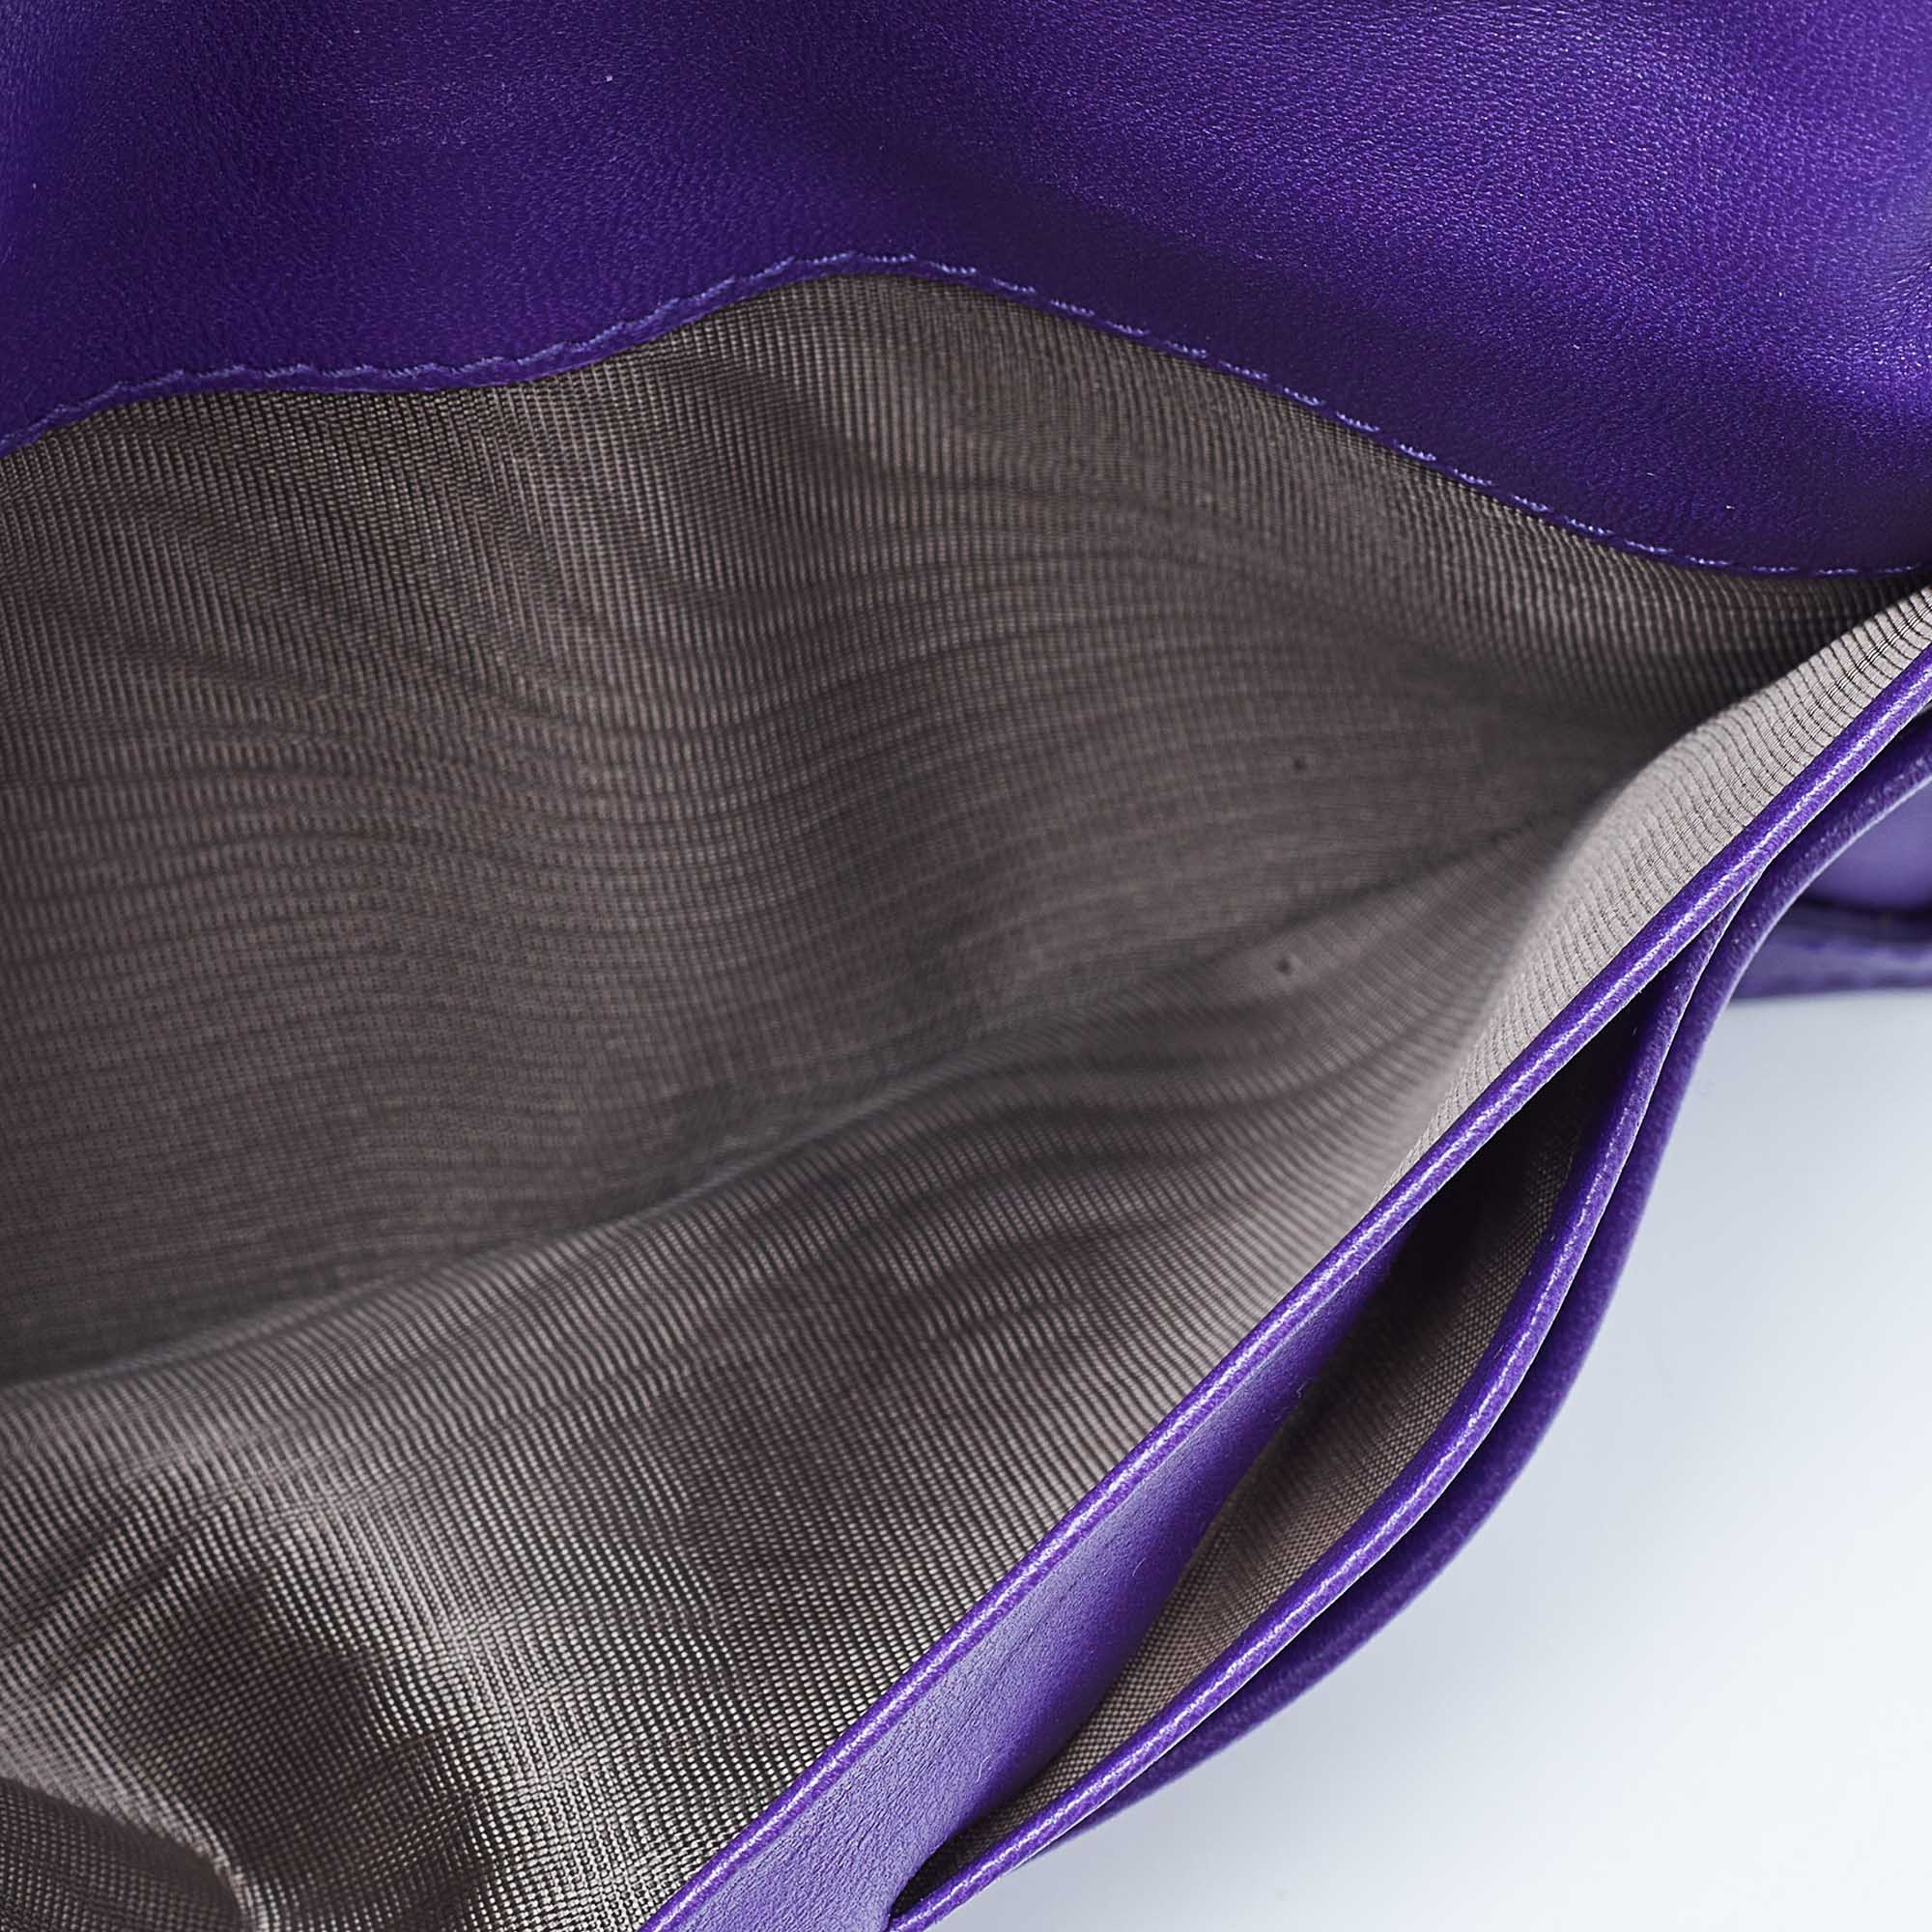 Bottega Veneta Purple Intrecciato Leather Bifold Organizer Wallet